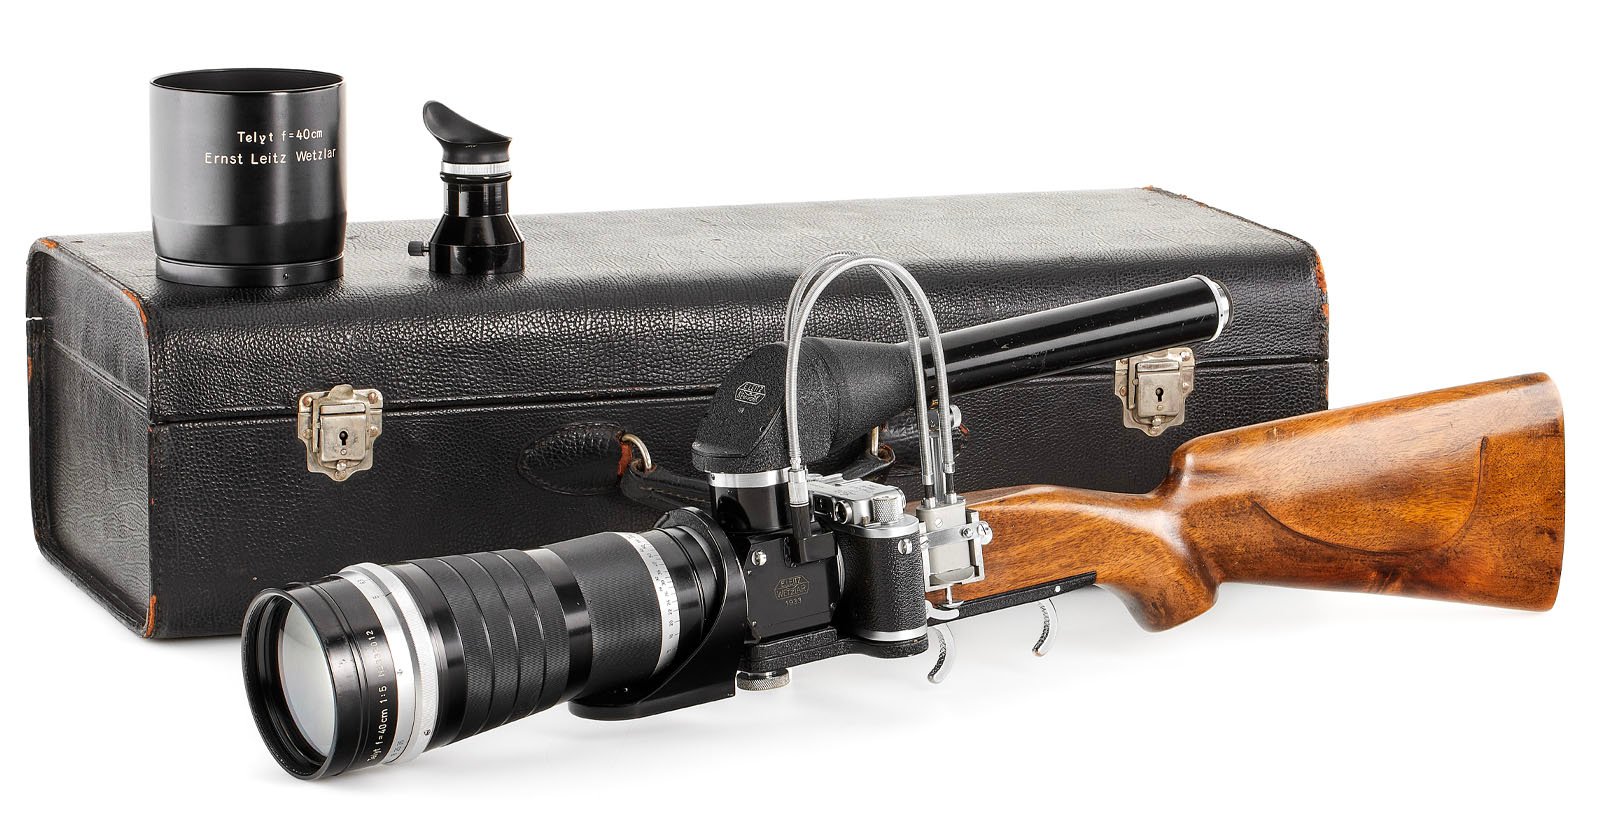  super-rare leica rifle camera expected sell 280 